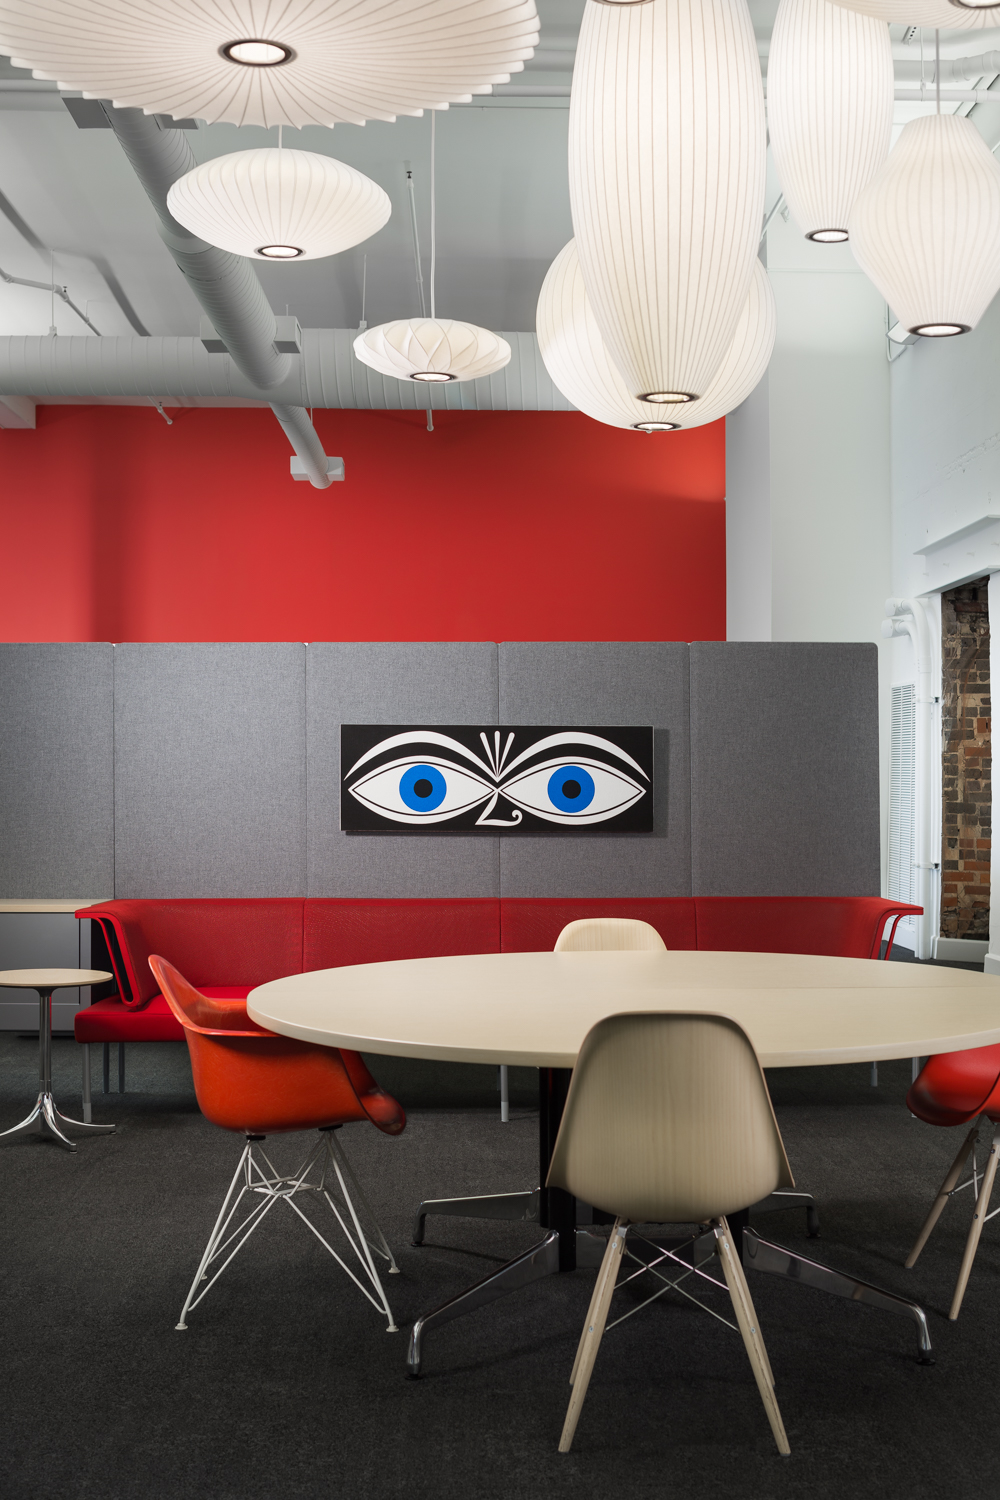 Office Environments - Birmingham AL Commercial Interiors Photogr